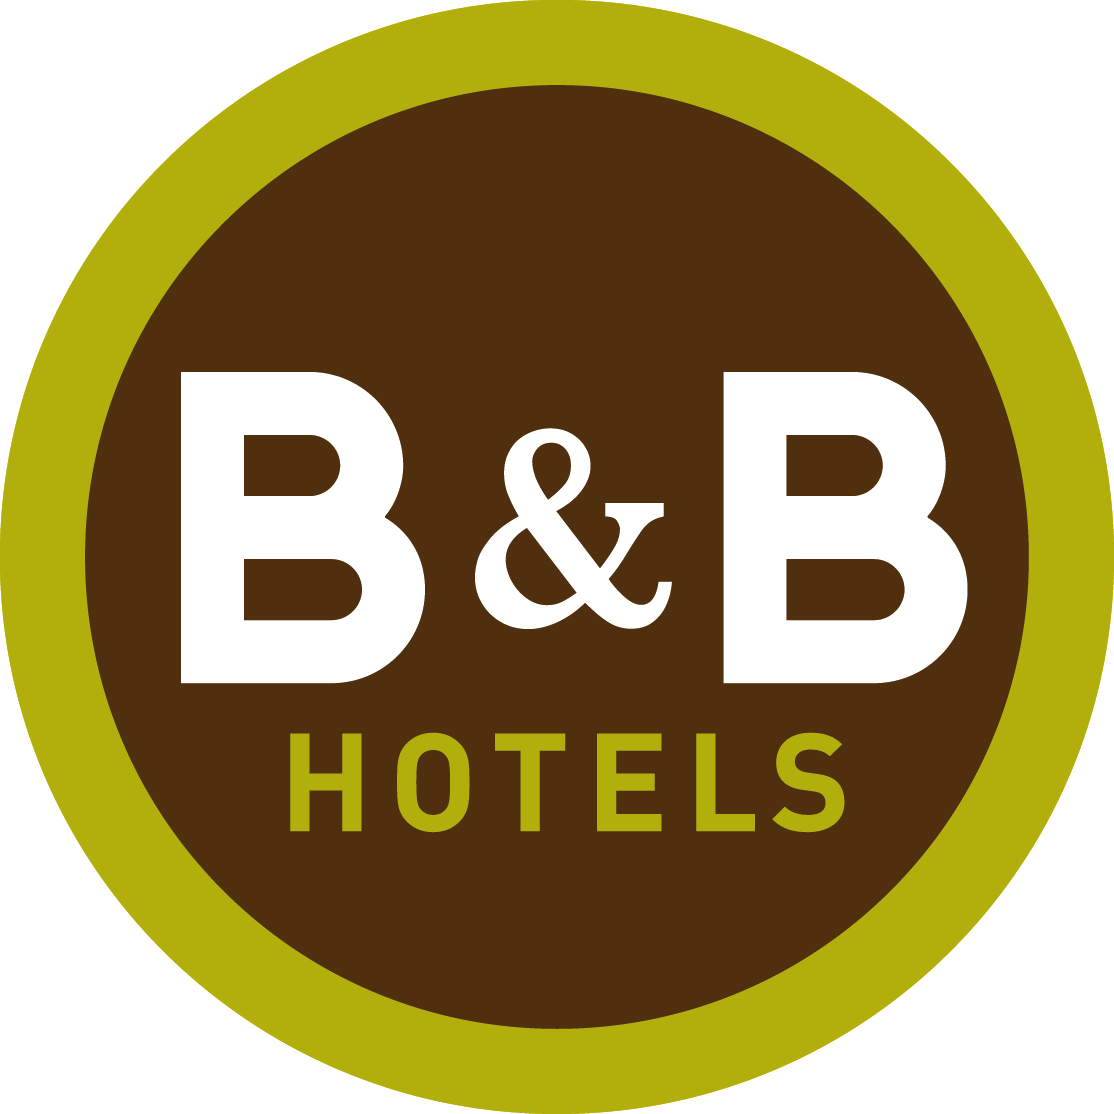 B&B HOTELS